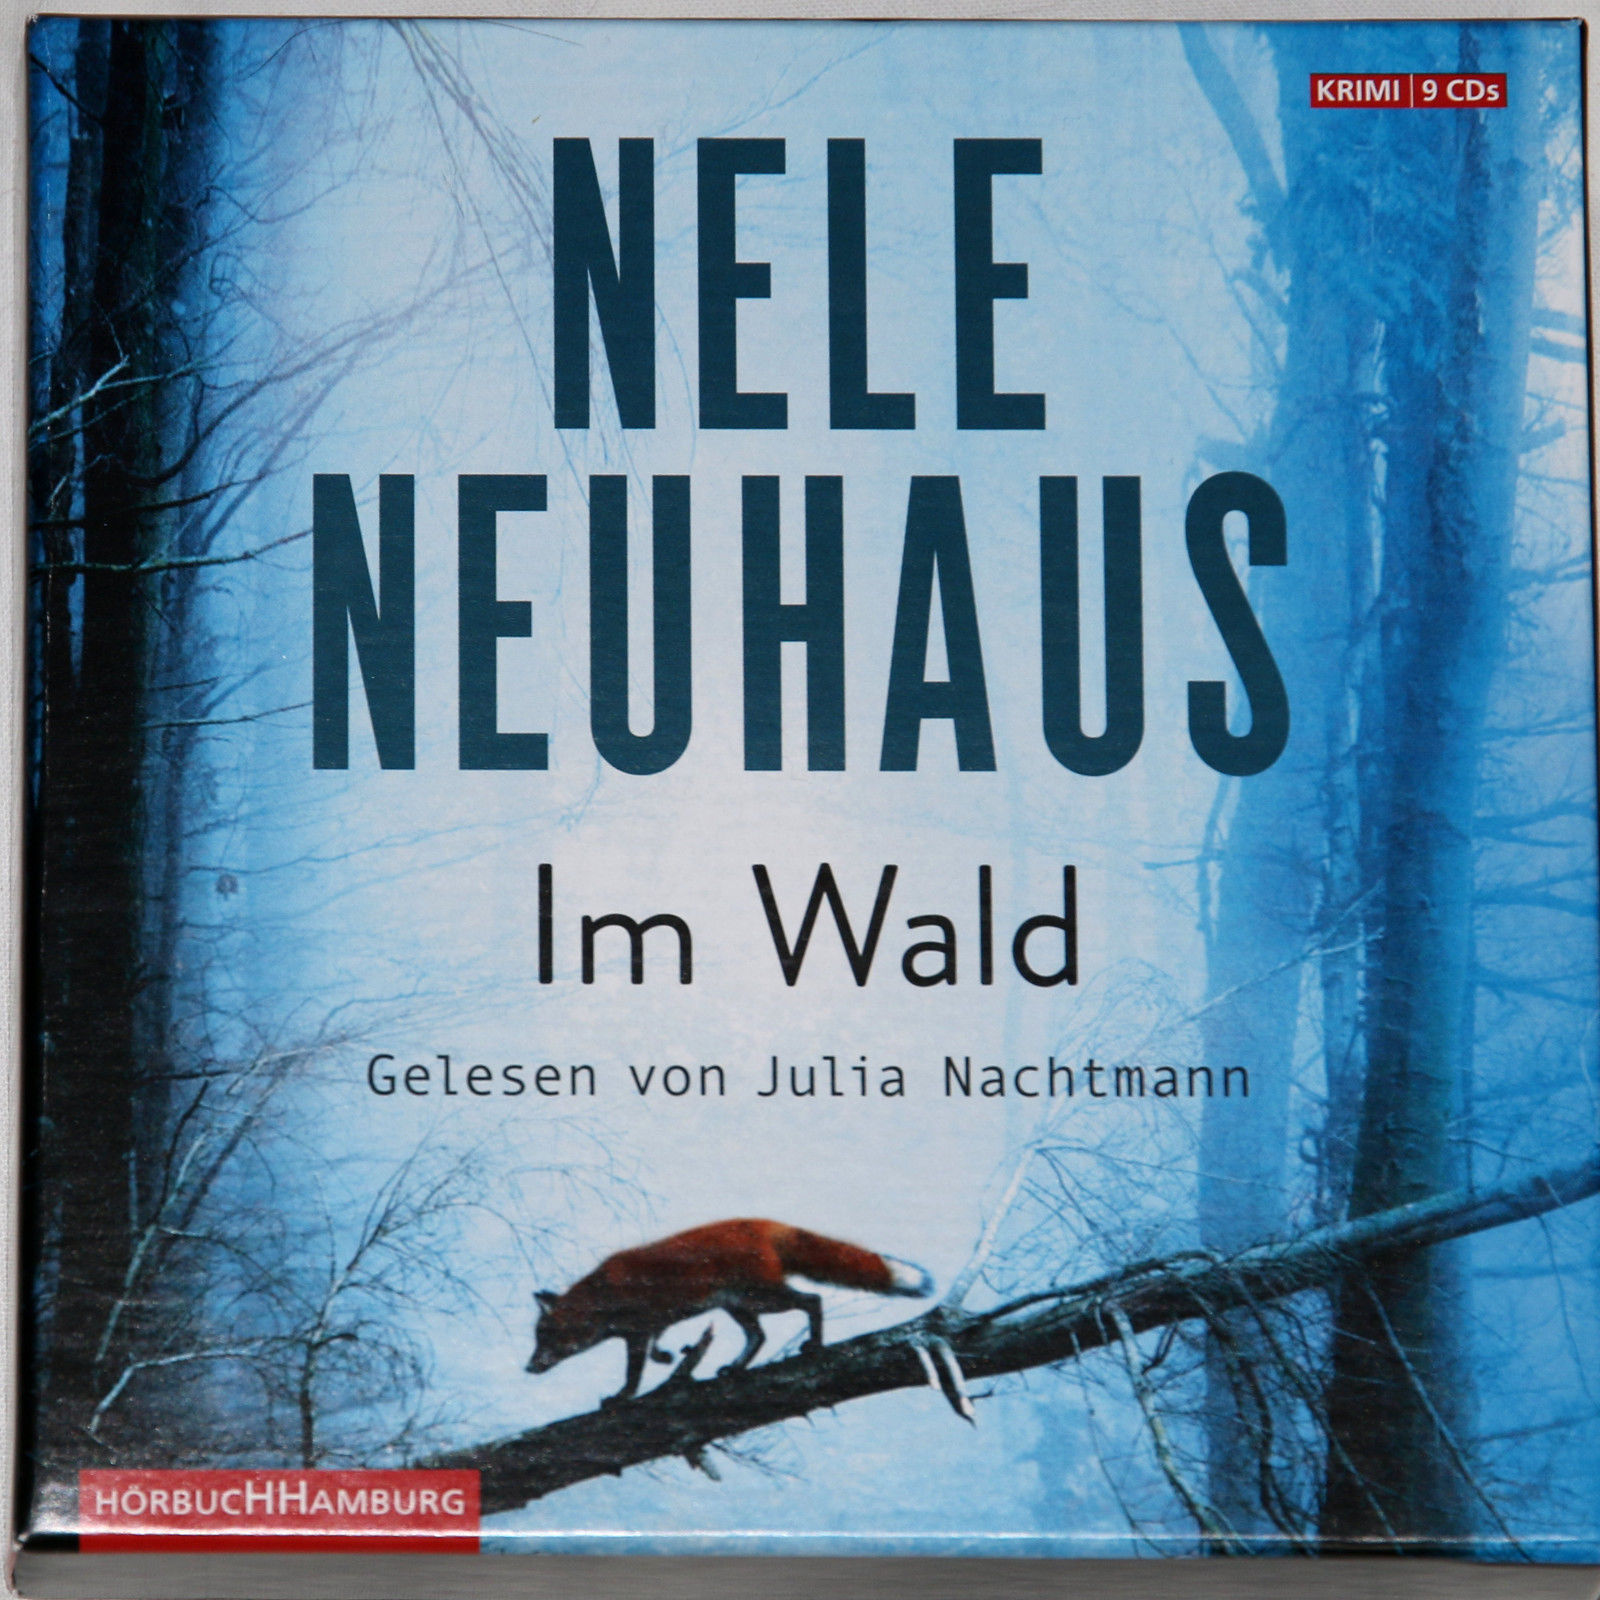 Hörbuch Nele Neuhaus Im Wald 9 CD-Set